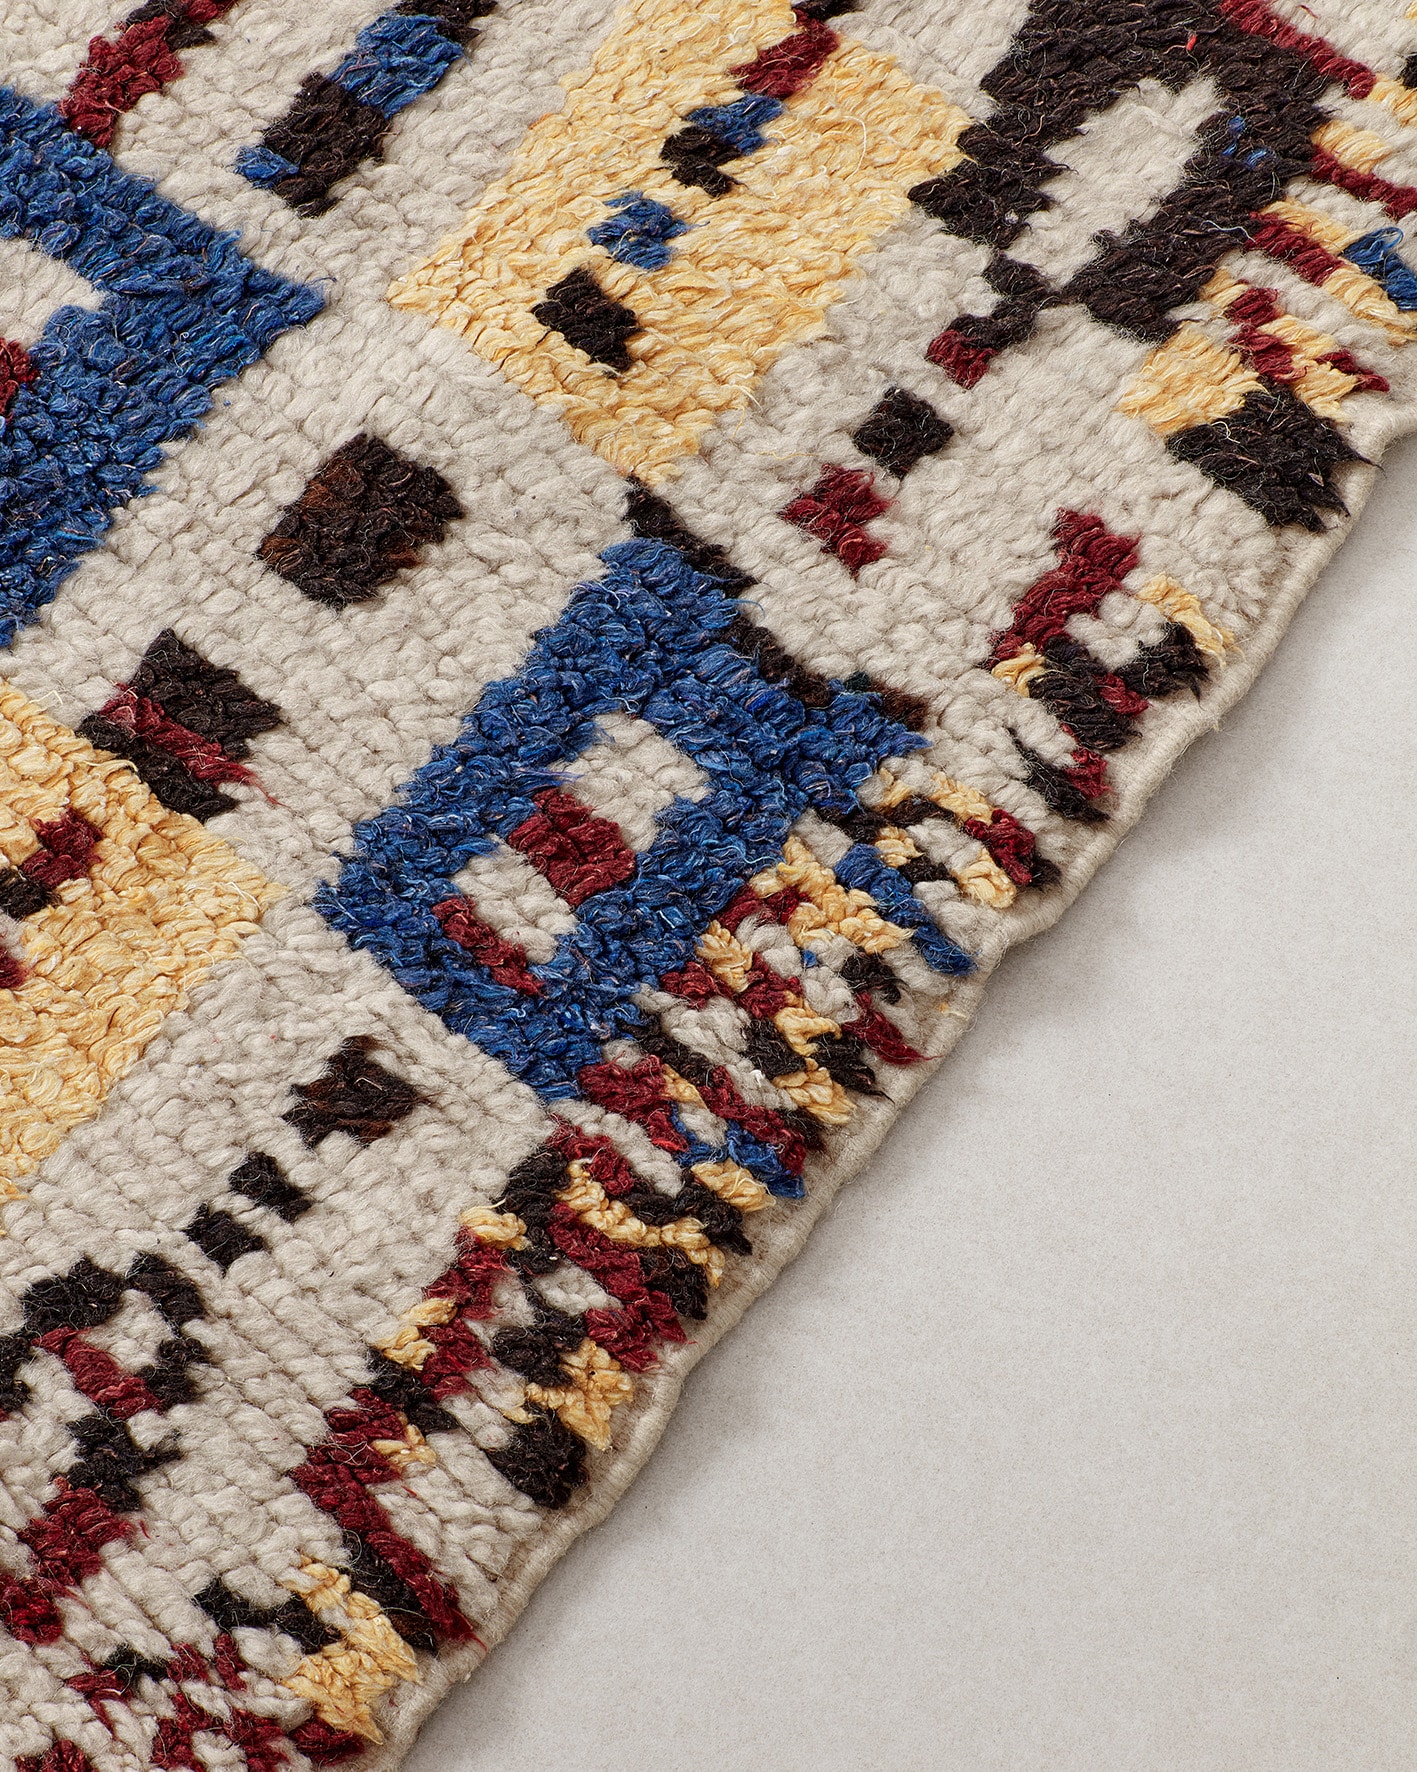 Vintage Berber rug with a tribal design, close